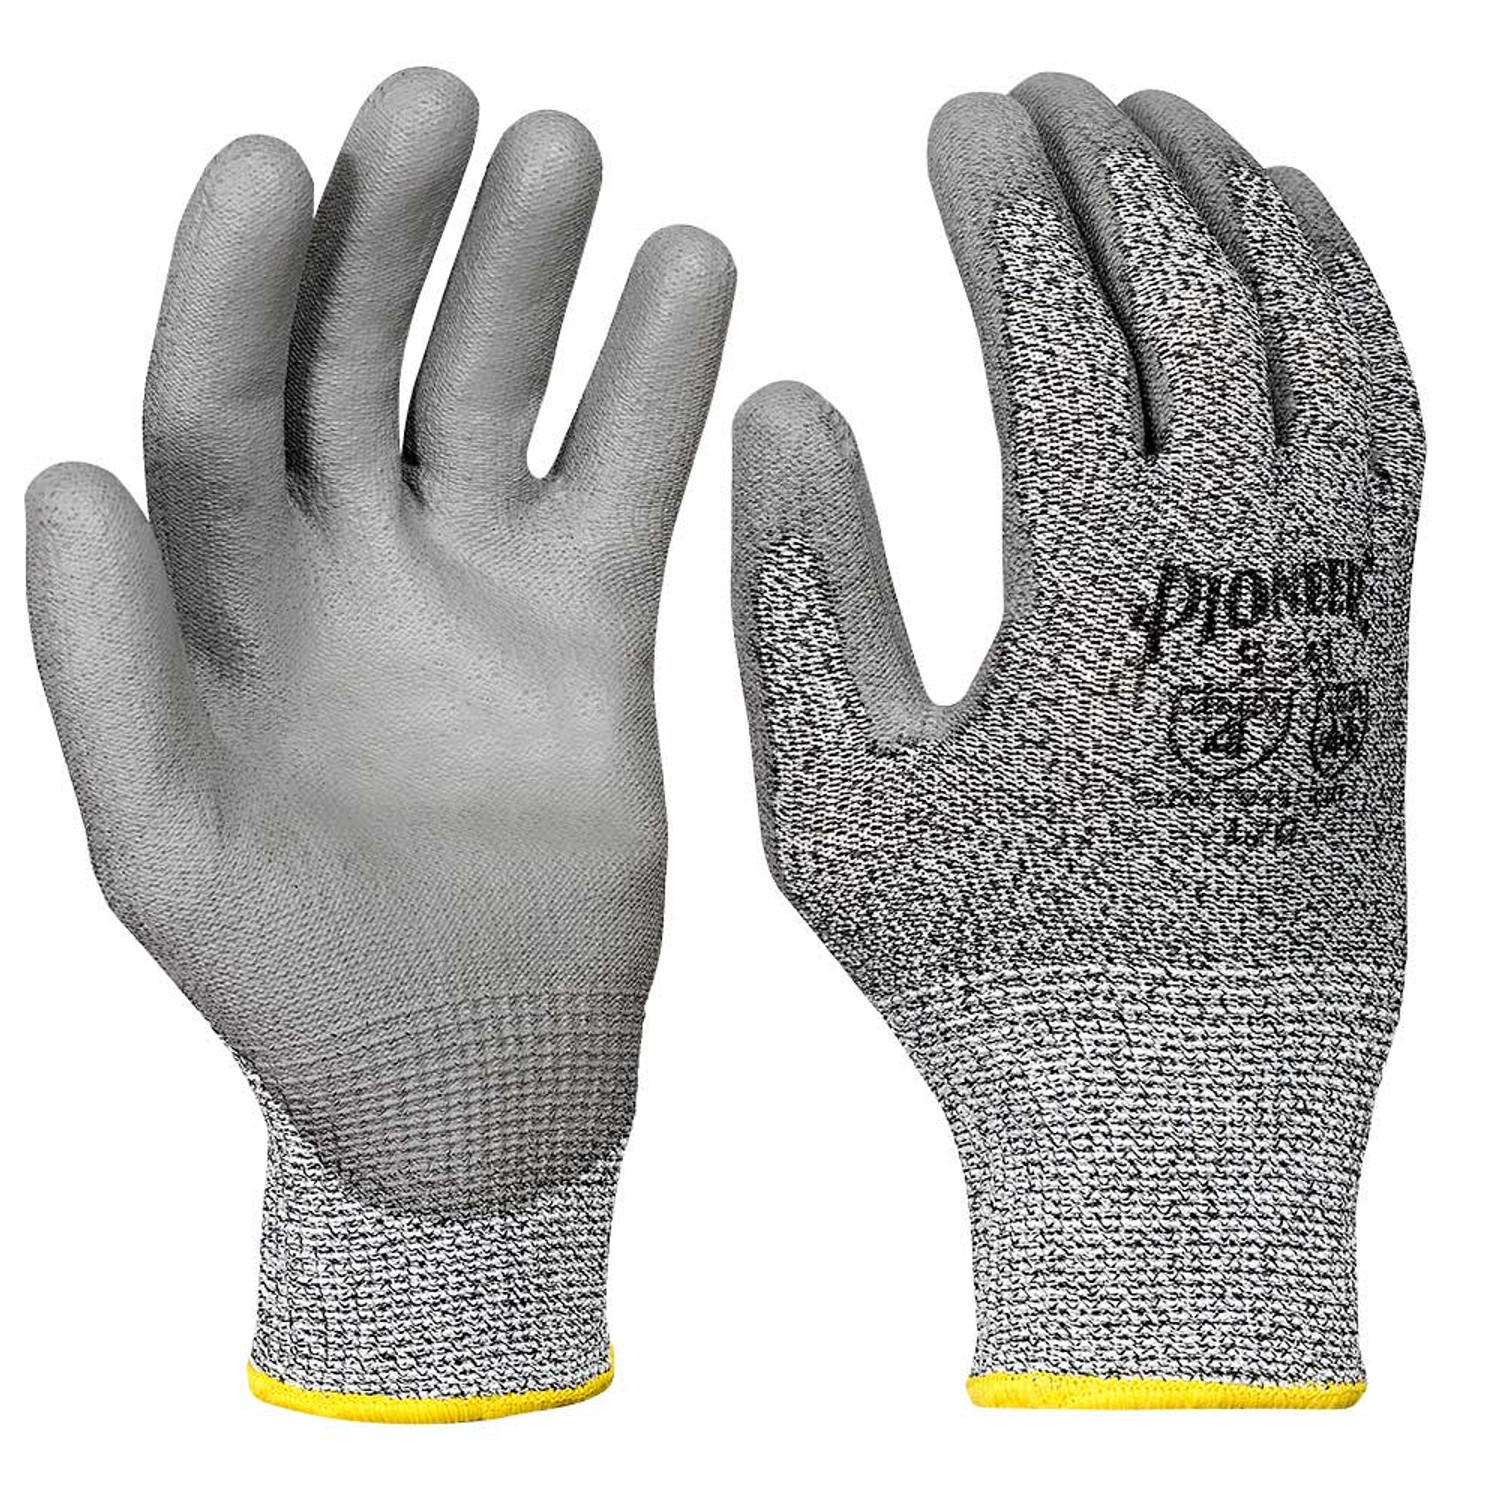 Anti-cut protection gloves - 234X - Showa Best Glove - handling